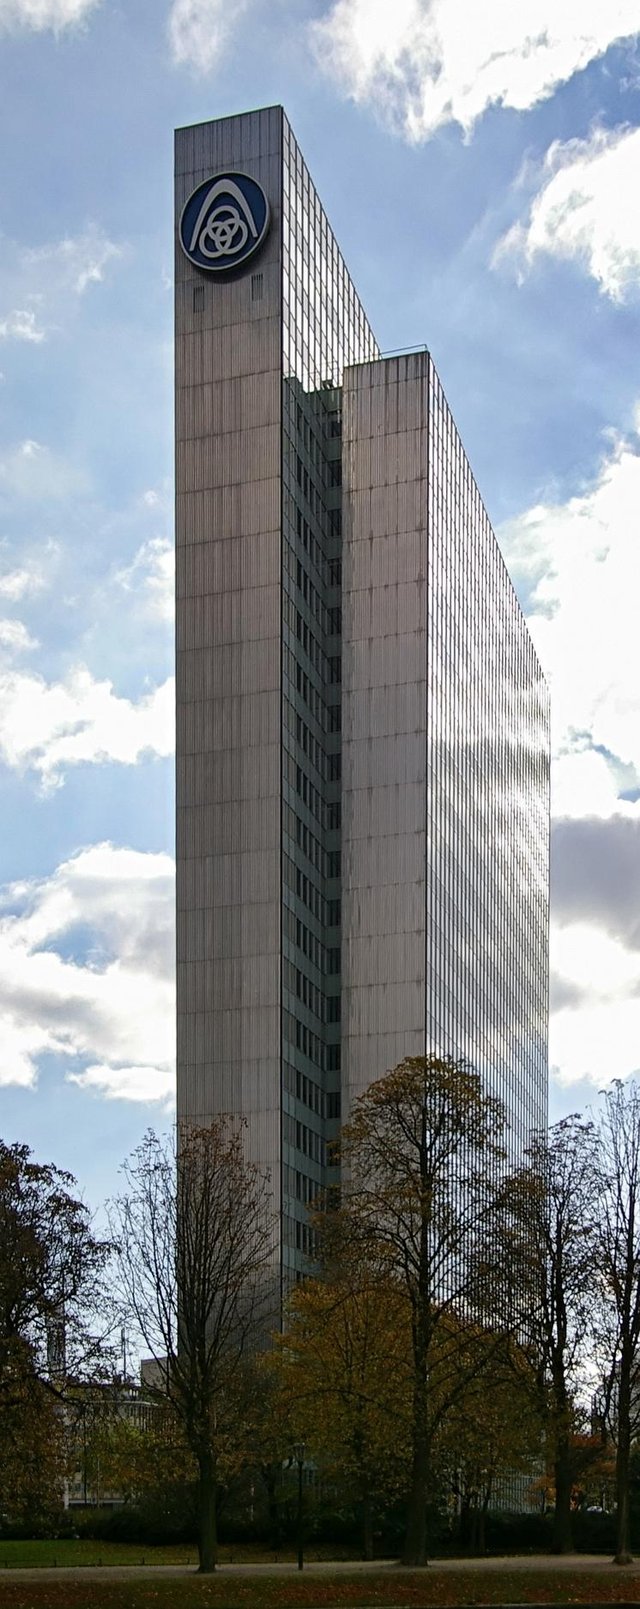 Former Thyssenkrupp building in Düsseldorf